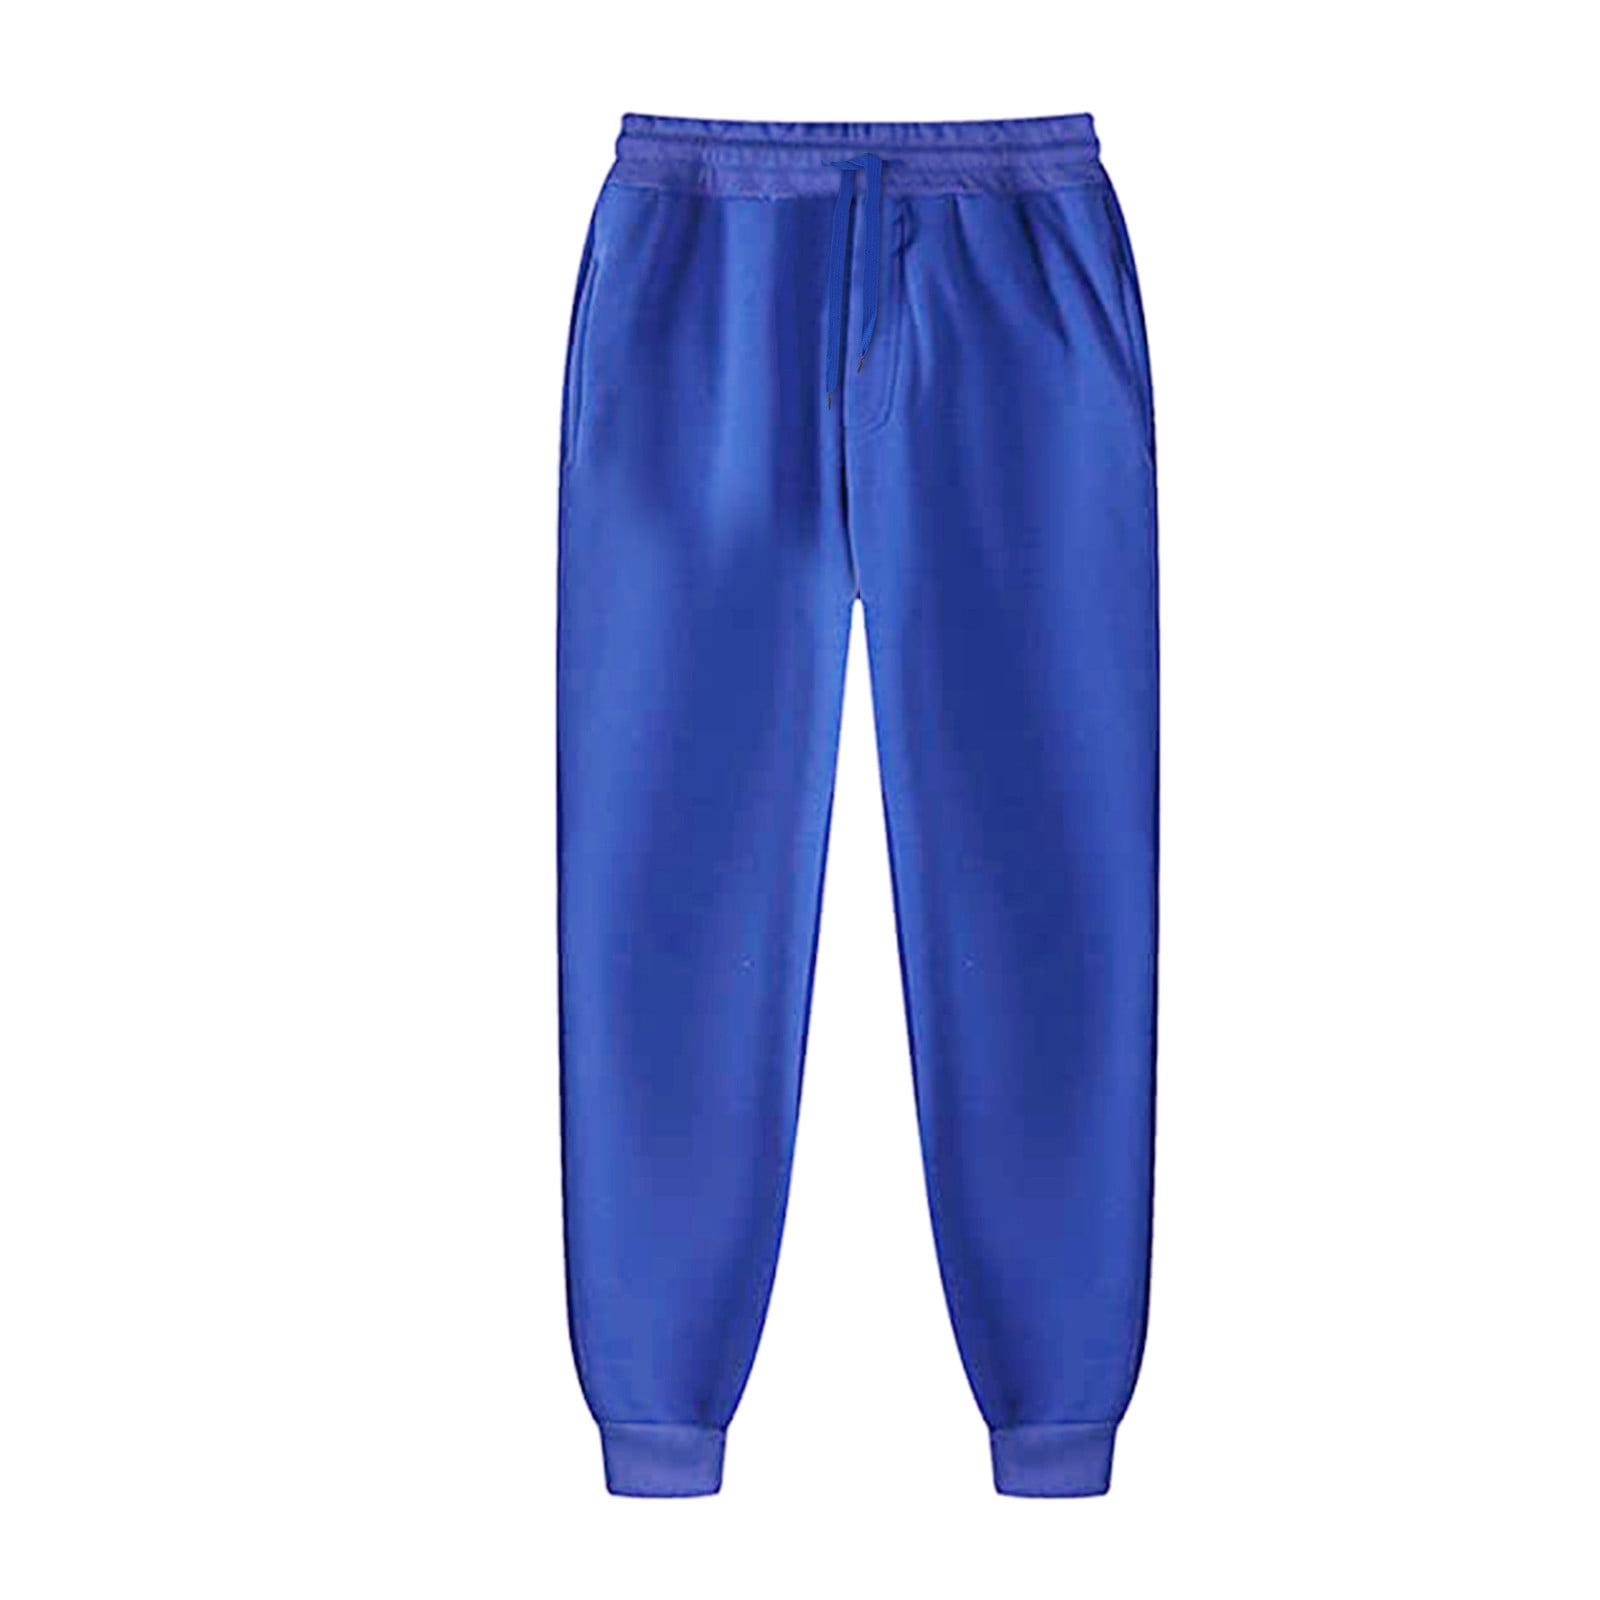 ≫ Pantalones Deporte Kinetic Run SAXX de color Azul